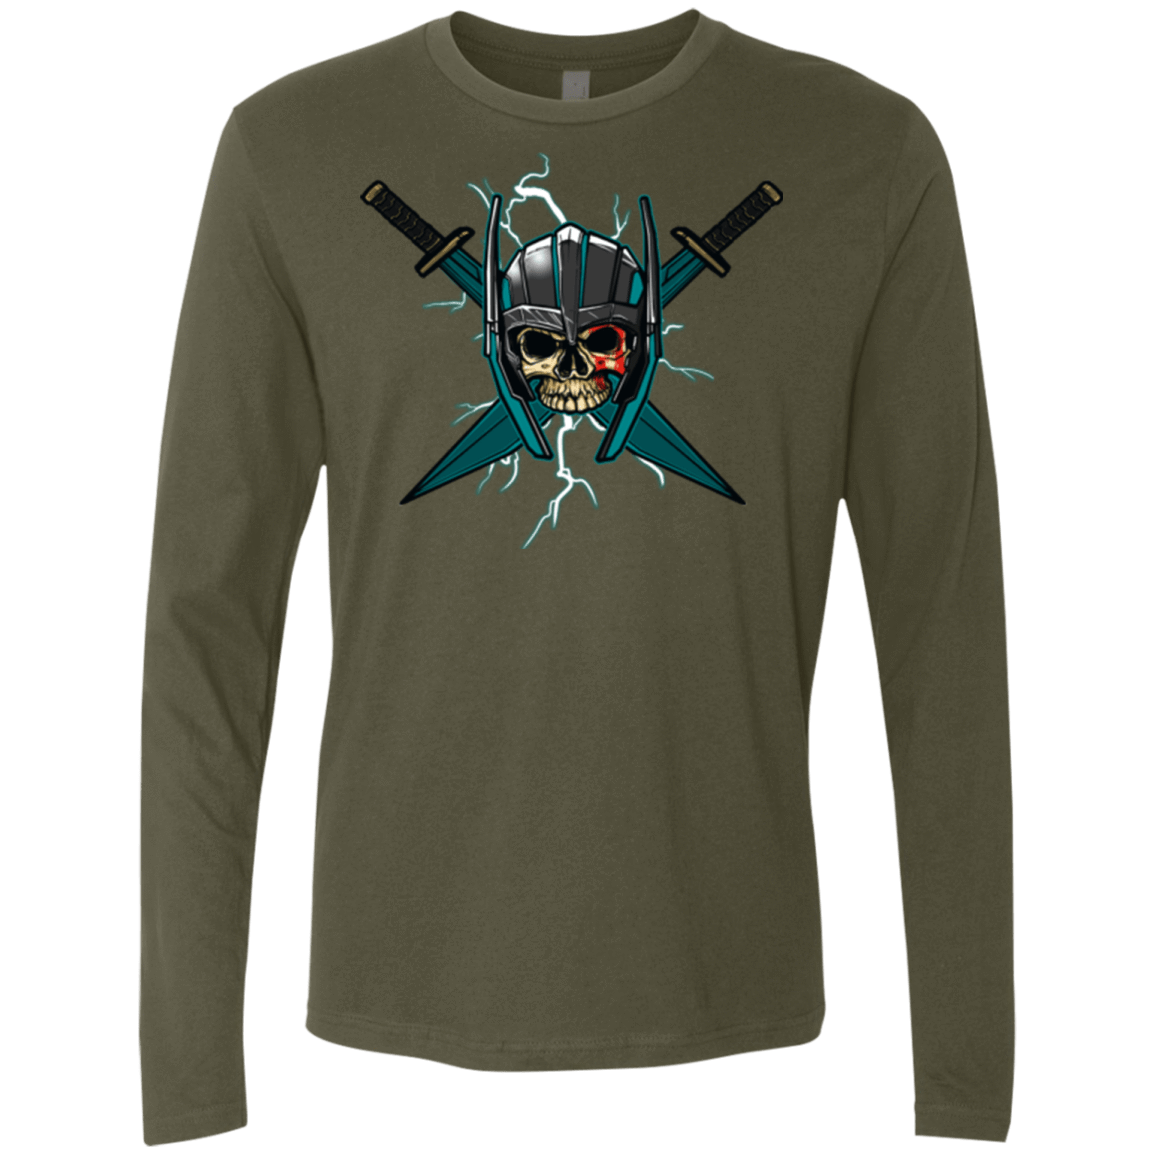 T-Shirts Military Green / S Ragnarok Men's Premium Long Sleeve